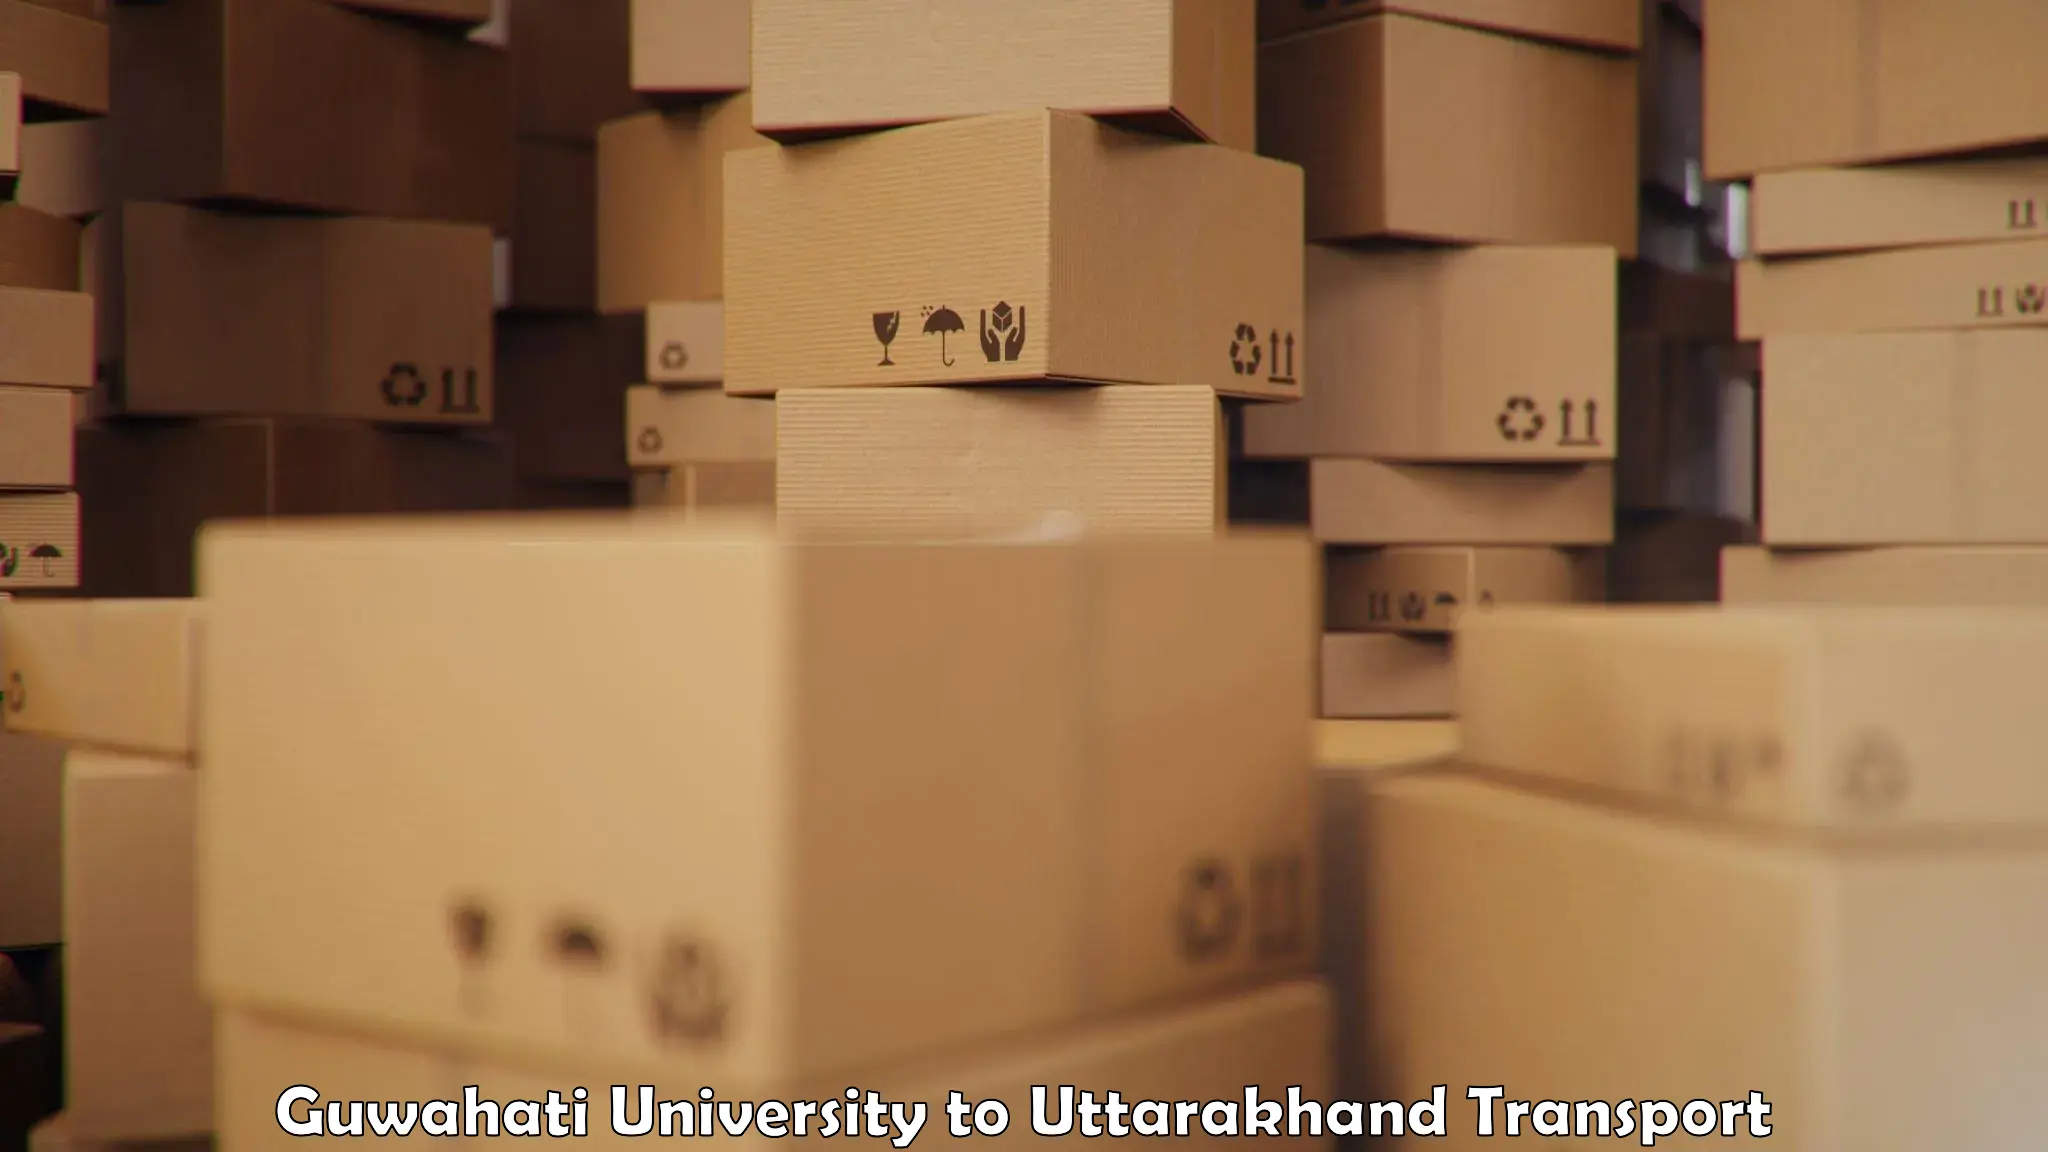 Container transport service Guwahati University to Pithoragarh